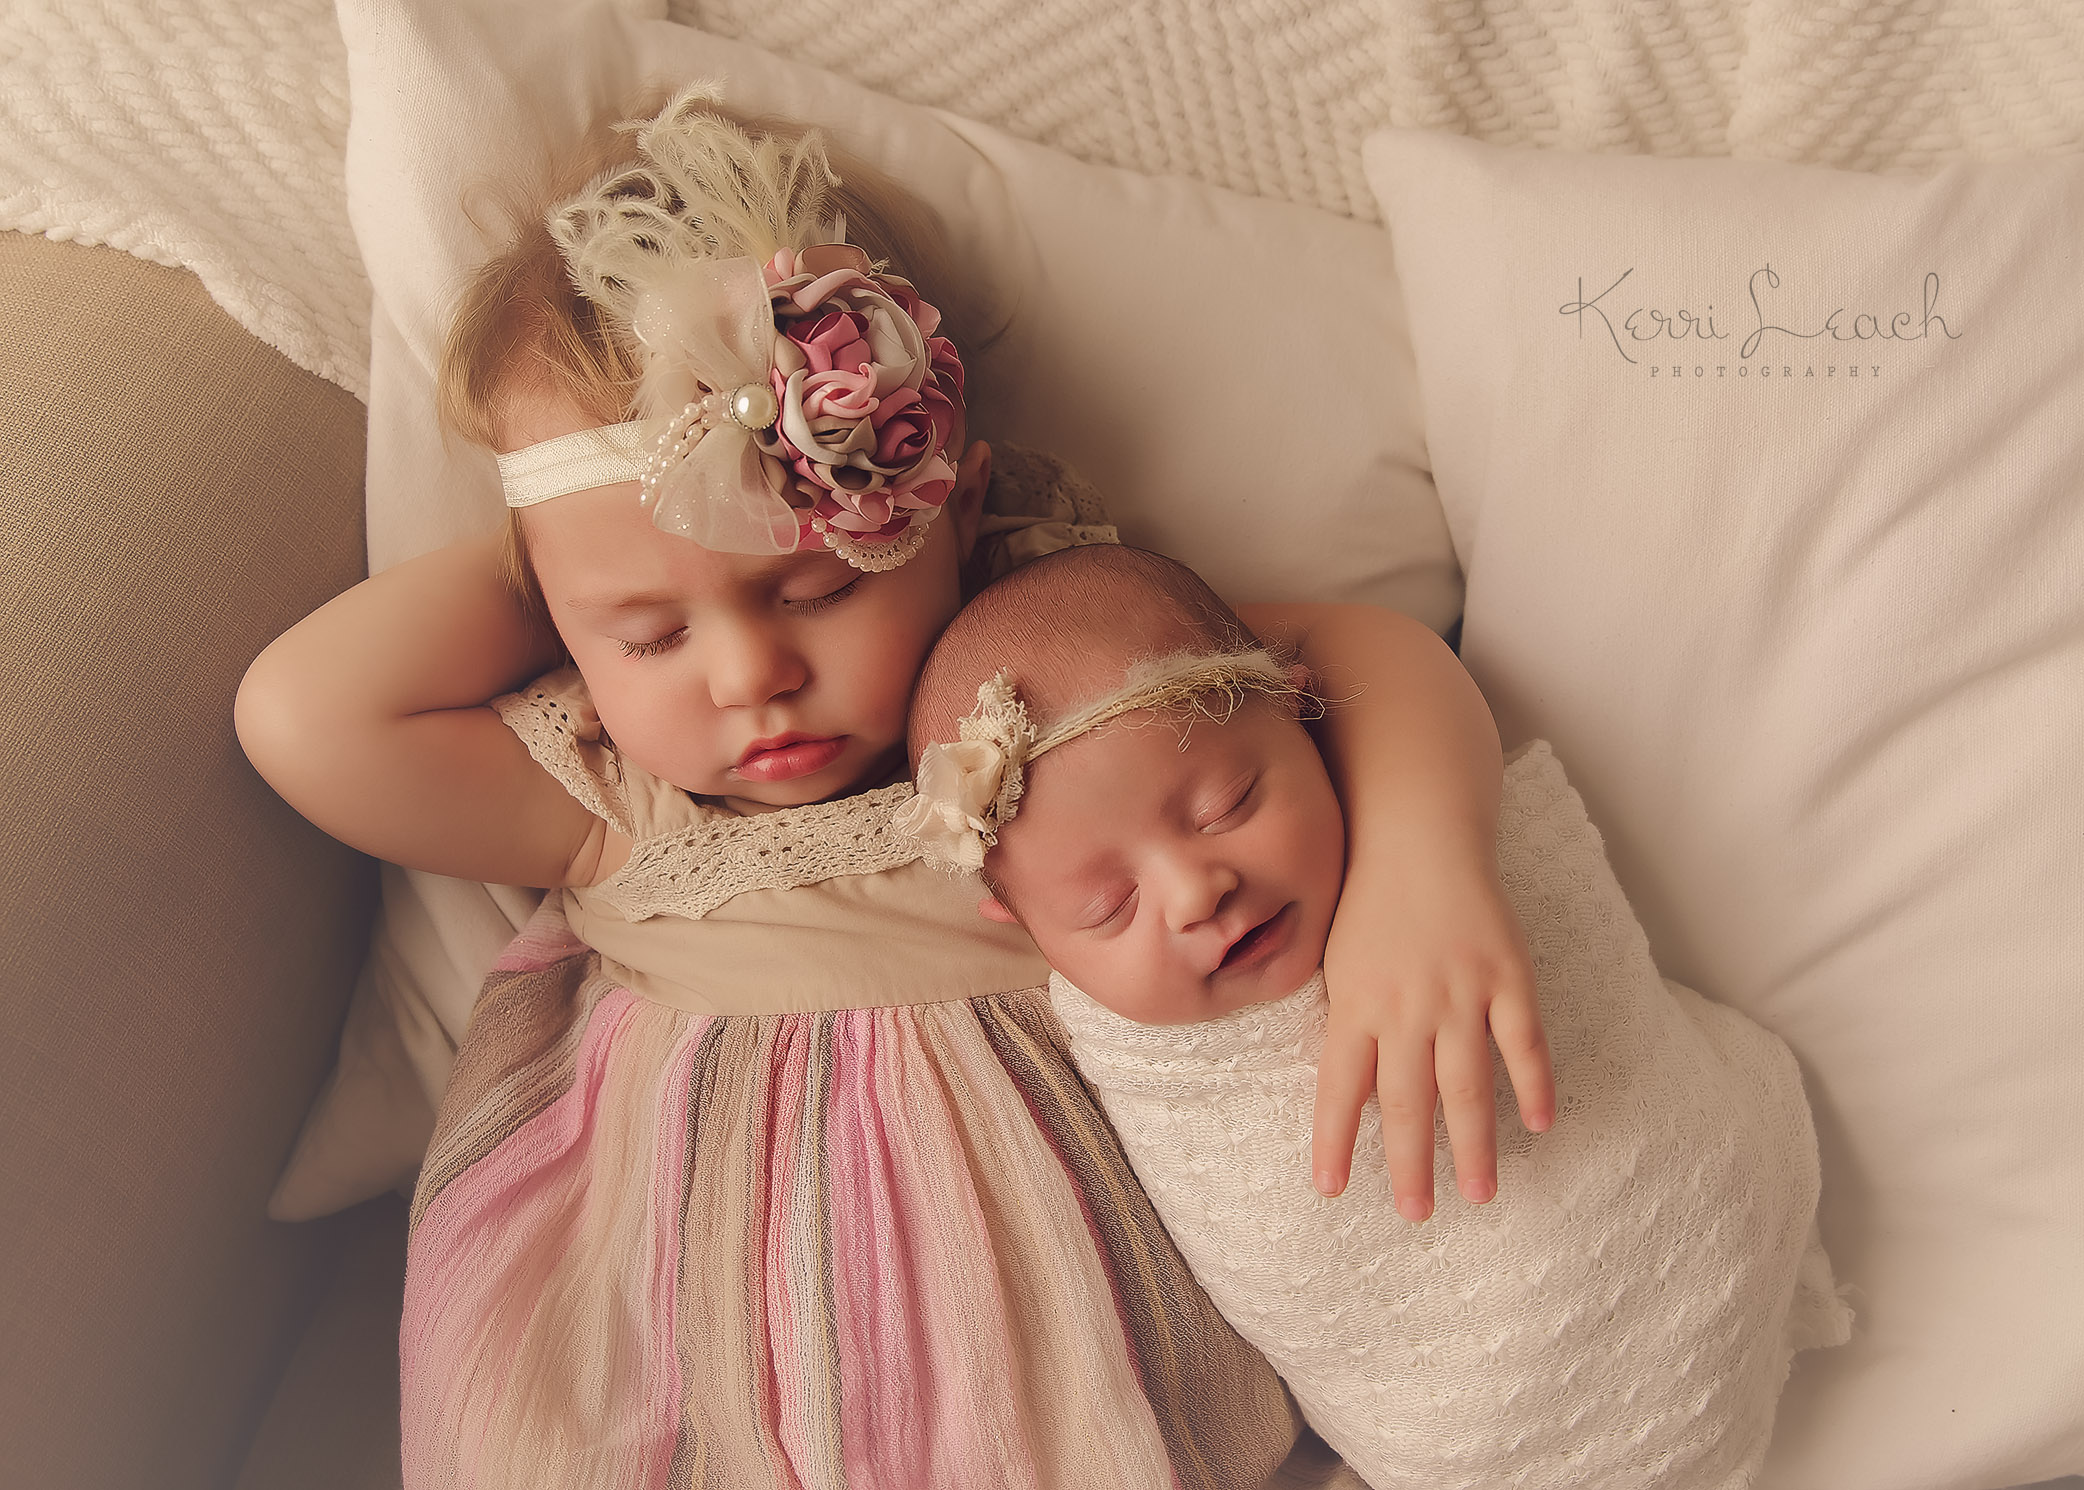 Kerri Leach Photography-newborn session-newborn photographer Evansville, IN-newborn photographer Indiana-newborn session poses-sibling newborn